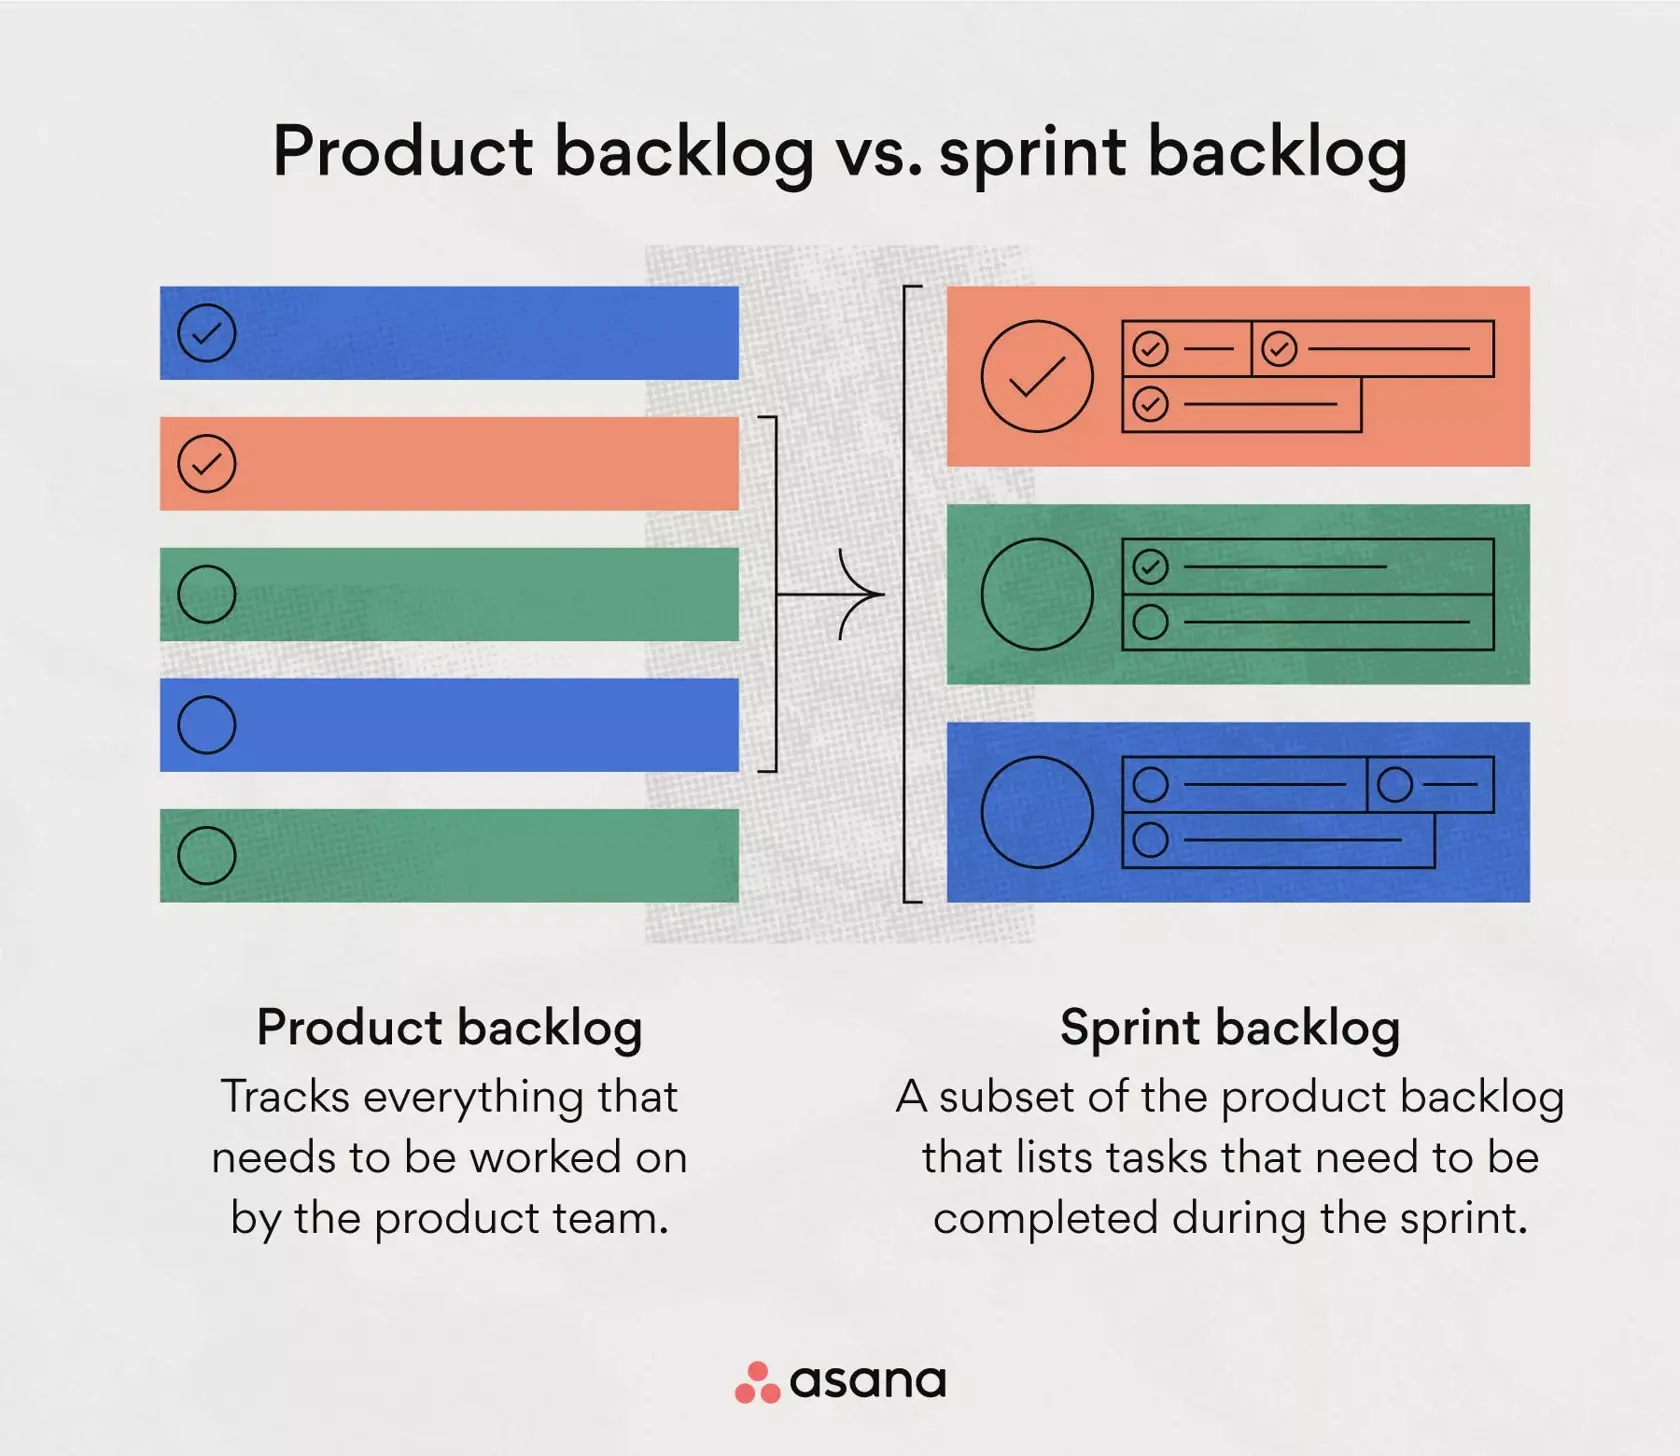 Product backlog vs. sprint backlog